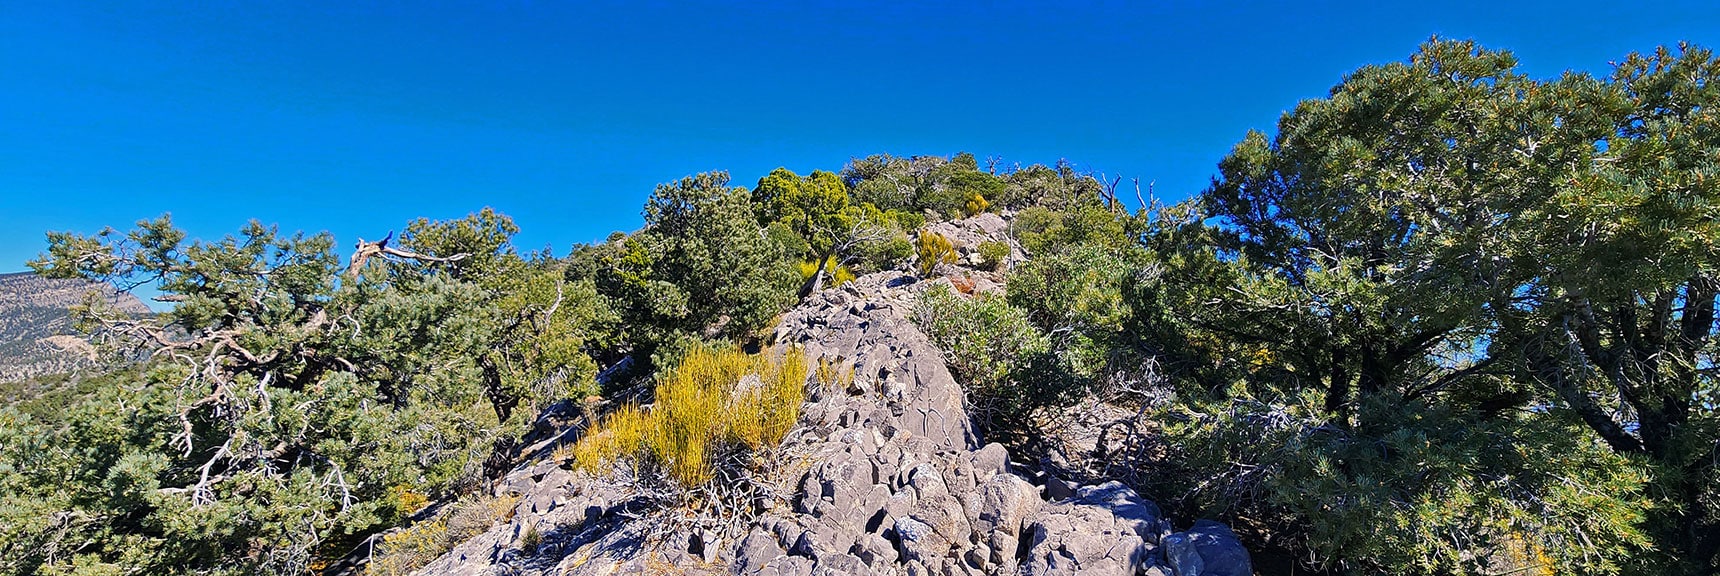 Approach Ridge Becoming Rockier and Narrower During Final Stretch to Pinnacle | Mini Matterhorn Pinnacle | Wilson Ridge | Lovell Canyon, Nevada